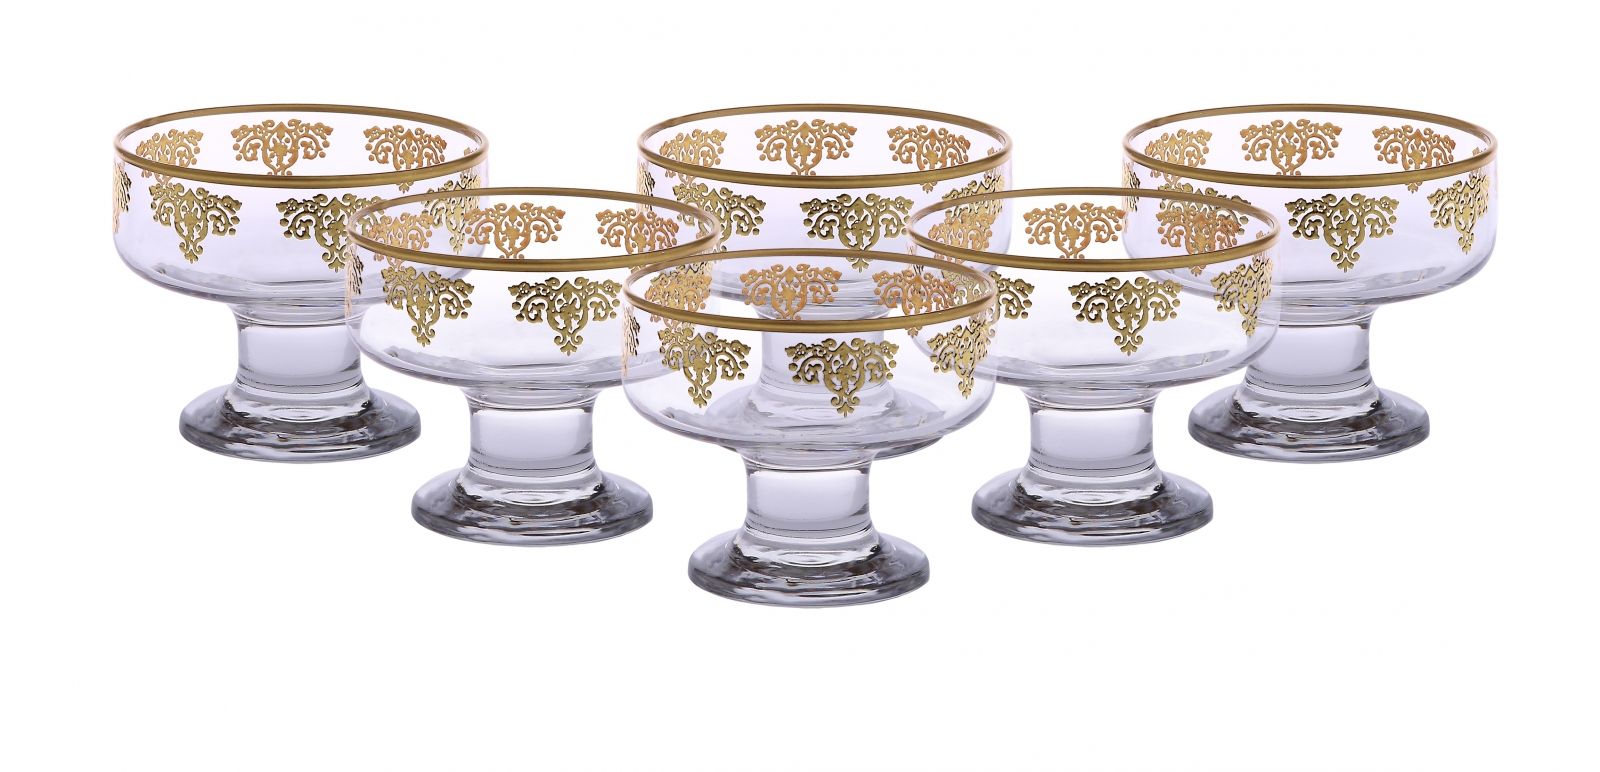 Set of 6 Dessert bowls with Rich Gold Design